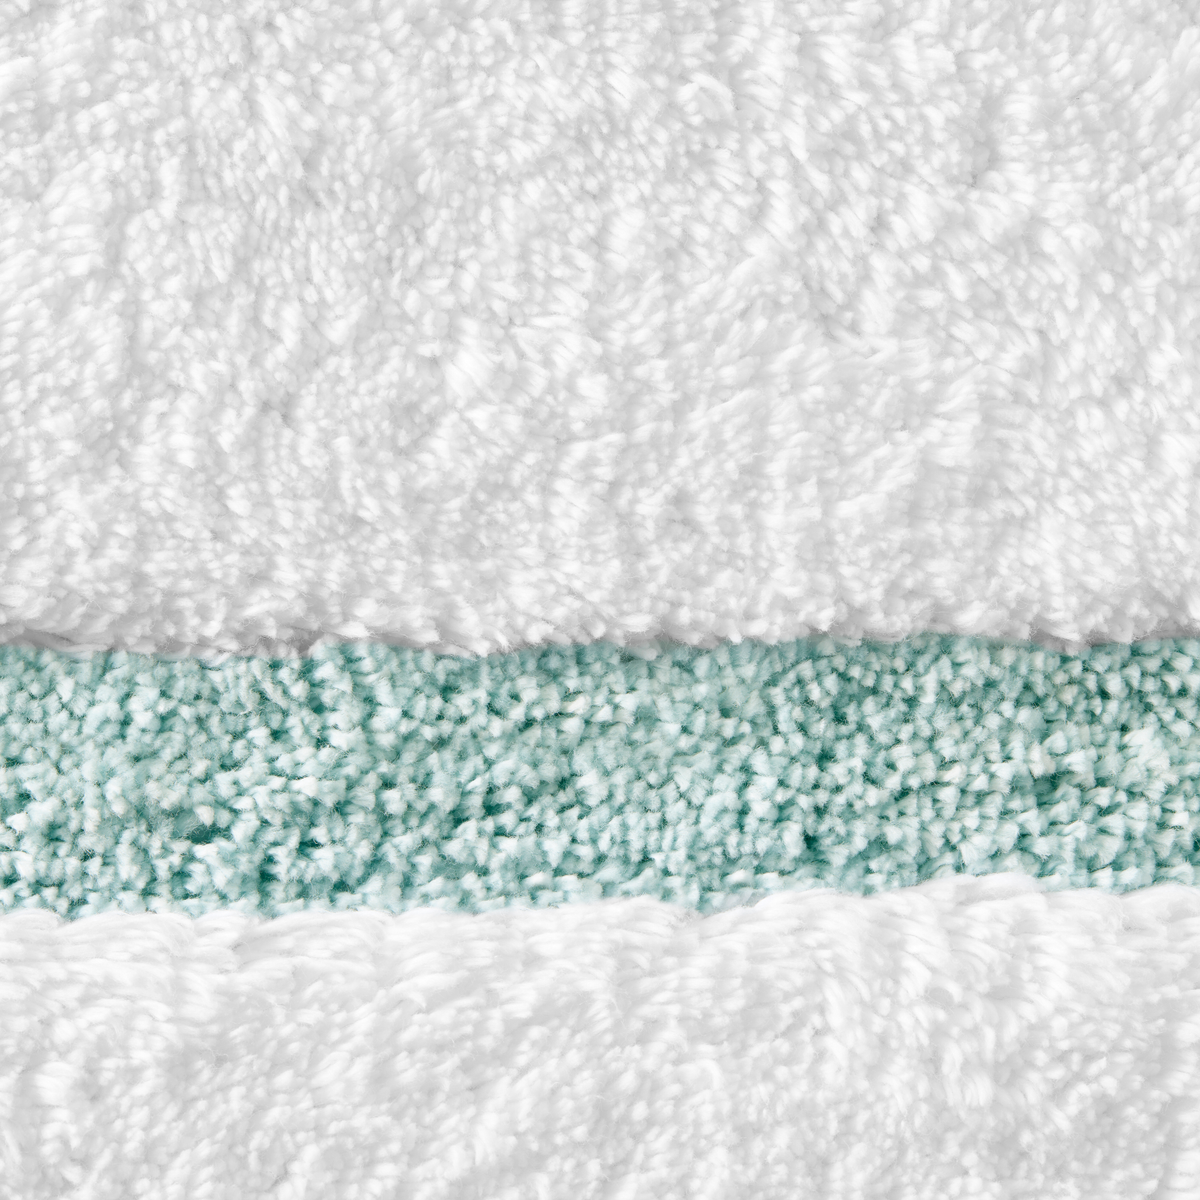 Swatch Sample of Sferra Lindo Bath Rugs in White Aqua Color